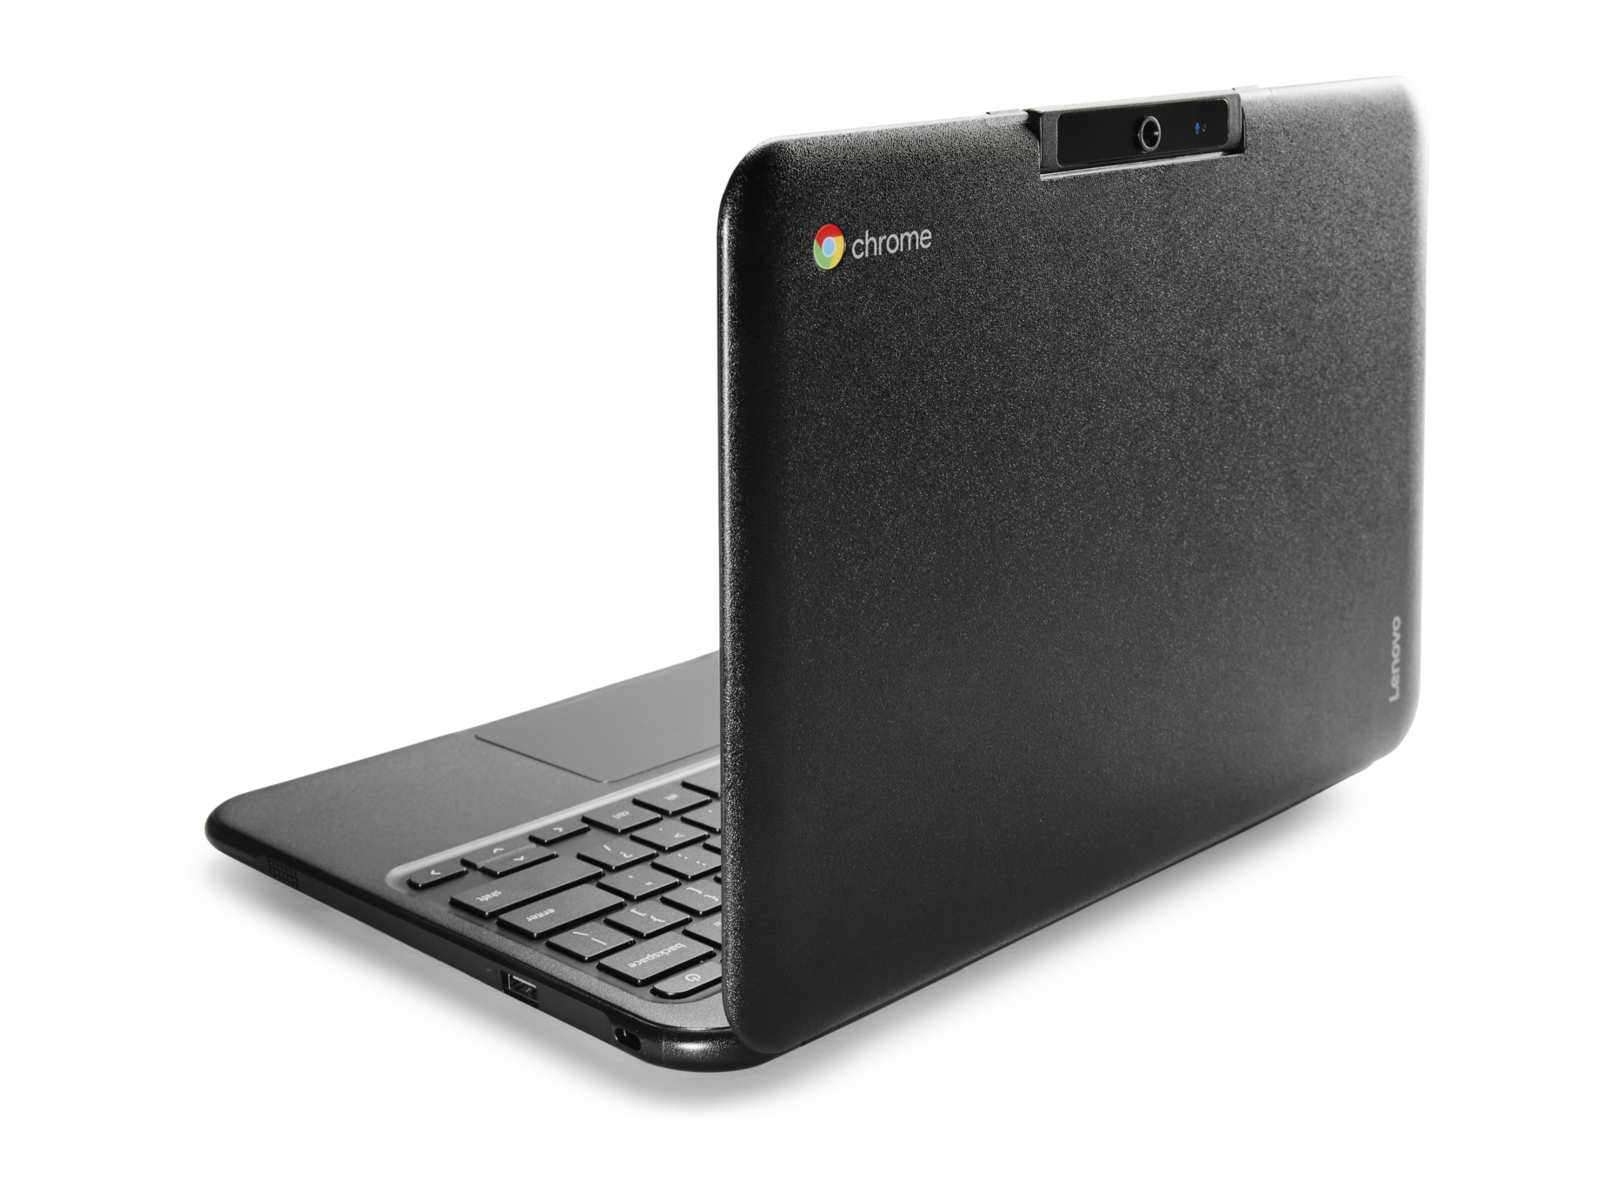 Lenovo N22 Chromebook 11.6" Laptop, Intel Celeron, 2GB RAM, 16GB SSD, Chrome OS, Black (USED) - image 4 of 4